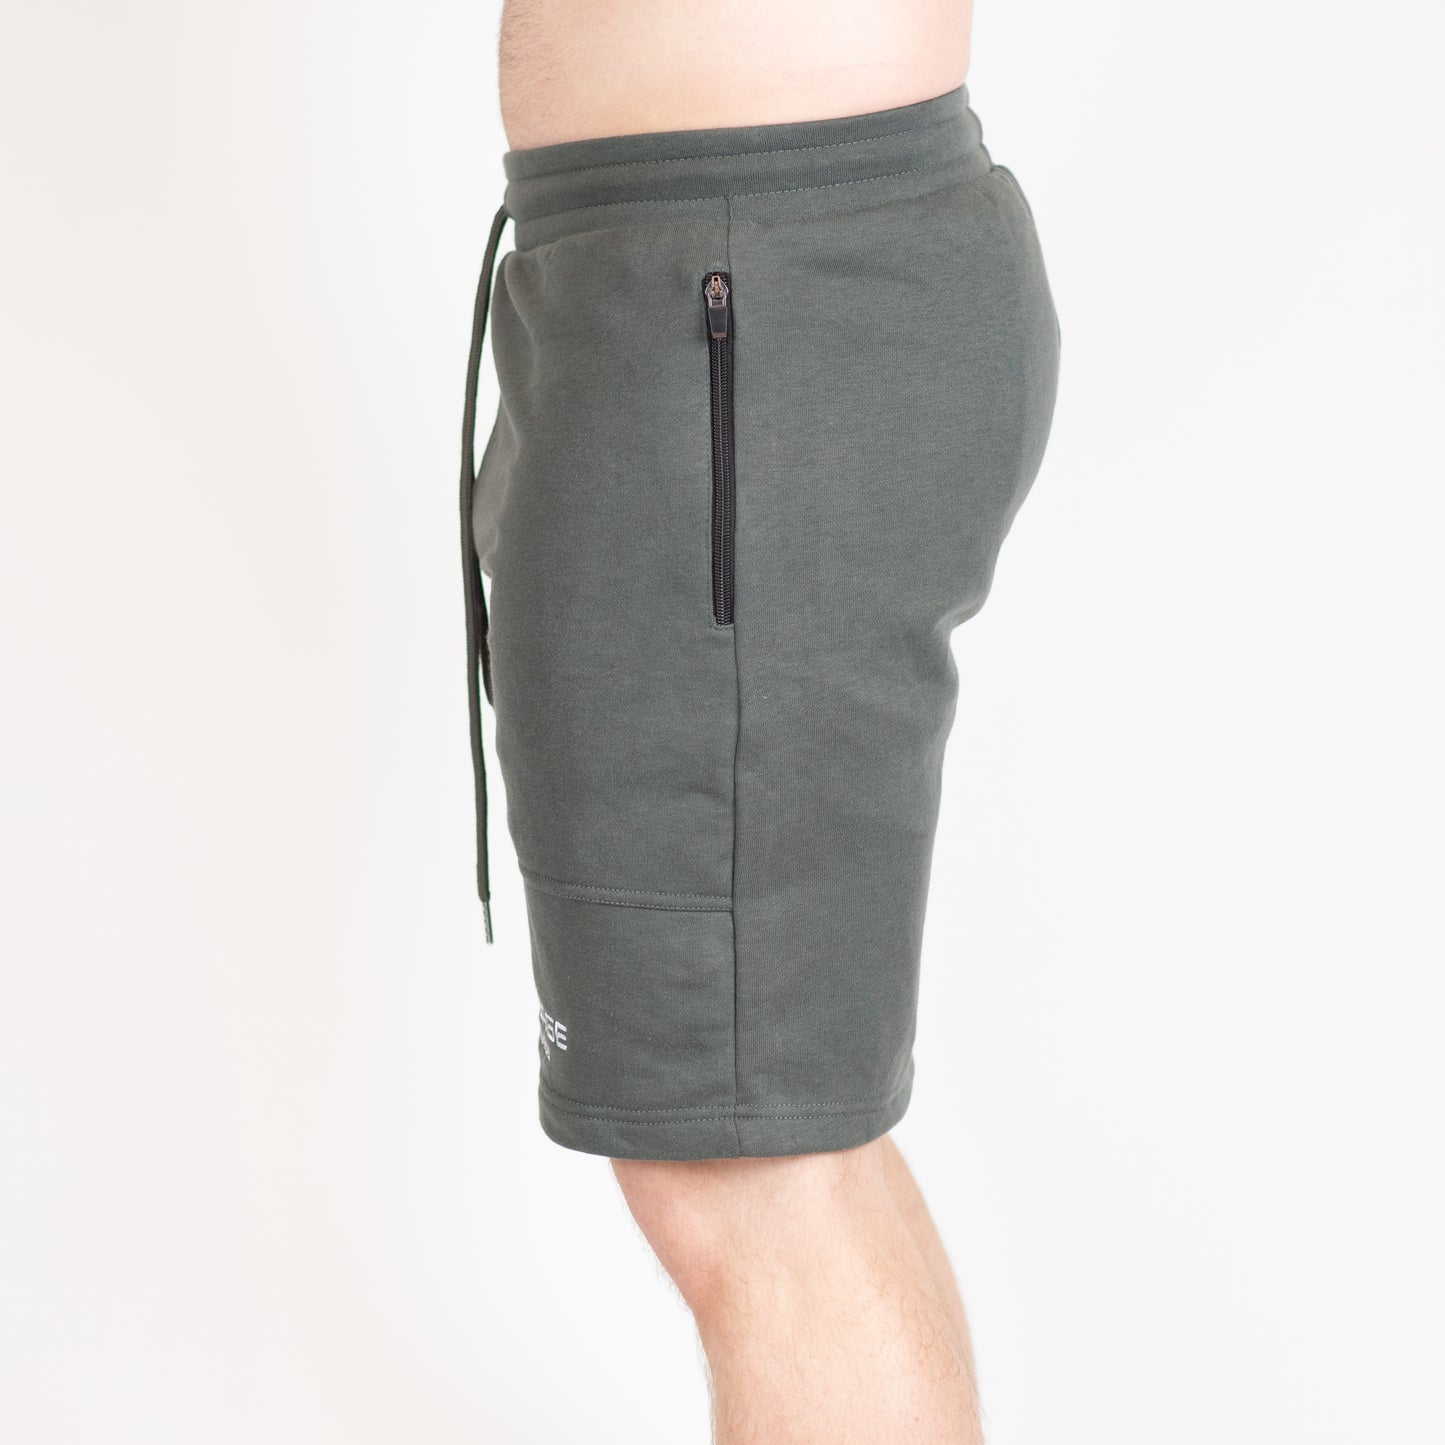 Male Premium Shorts Grey